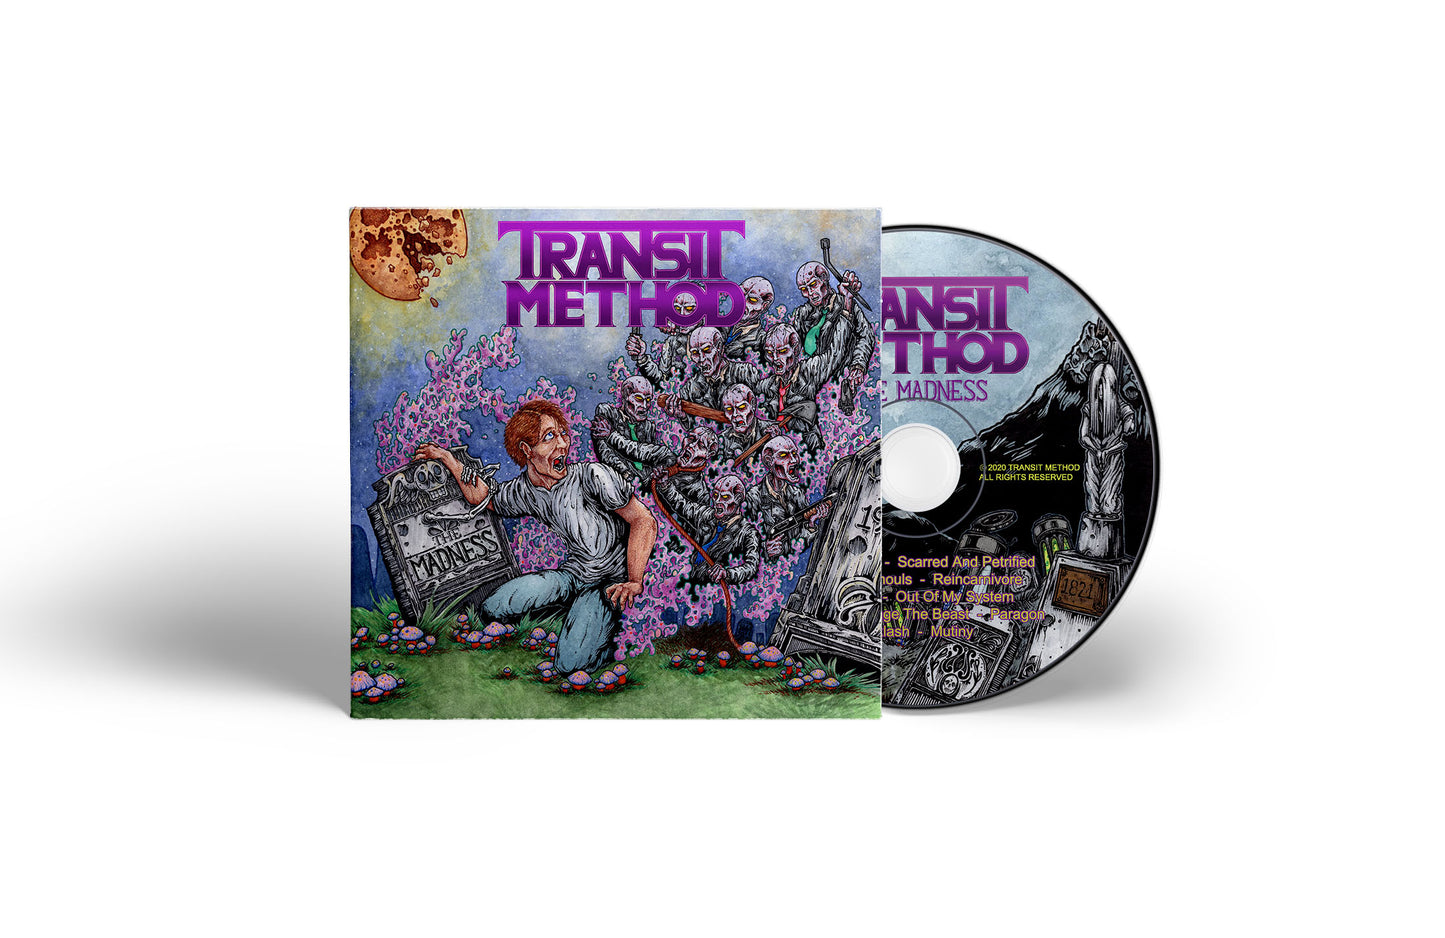 TRANSIT METHOD - The Madness 12" Vinyl LP